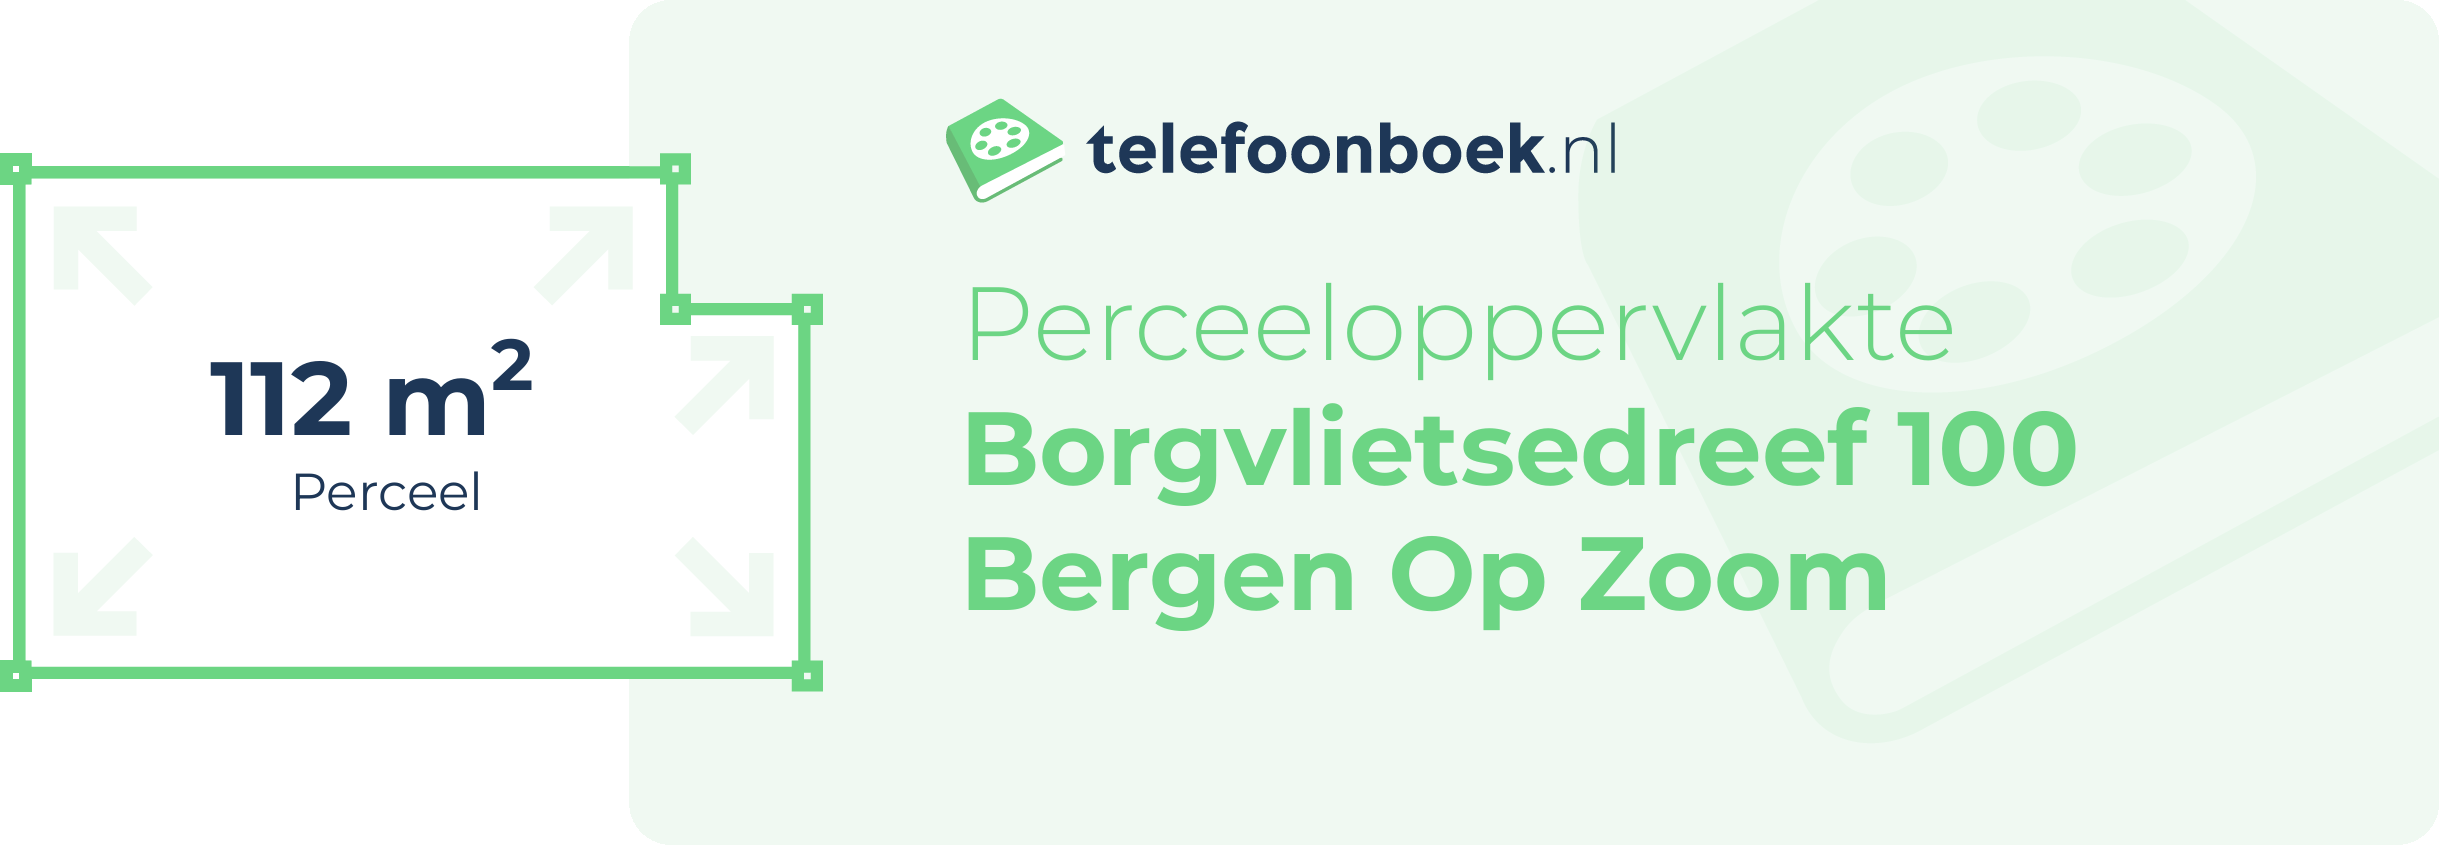 Perceeloppervlakte Borgvlietsedreef 100 Bergen Op Zoom